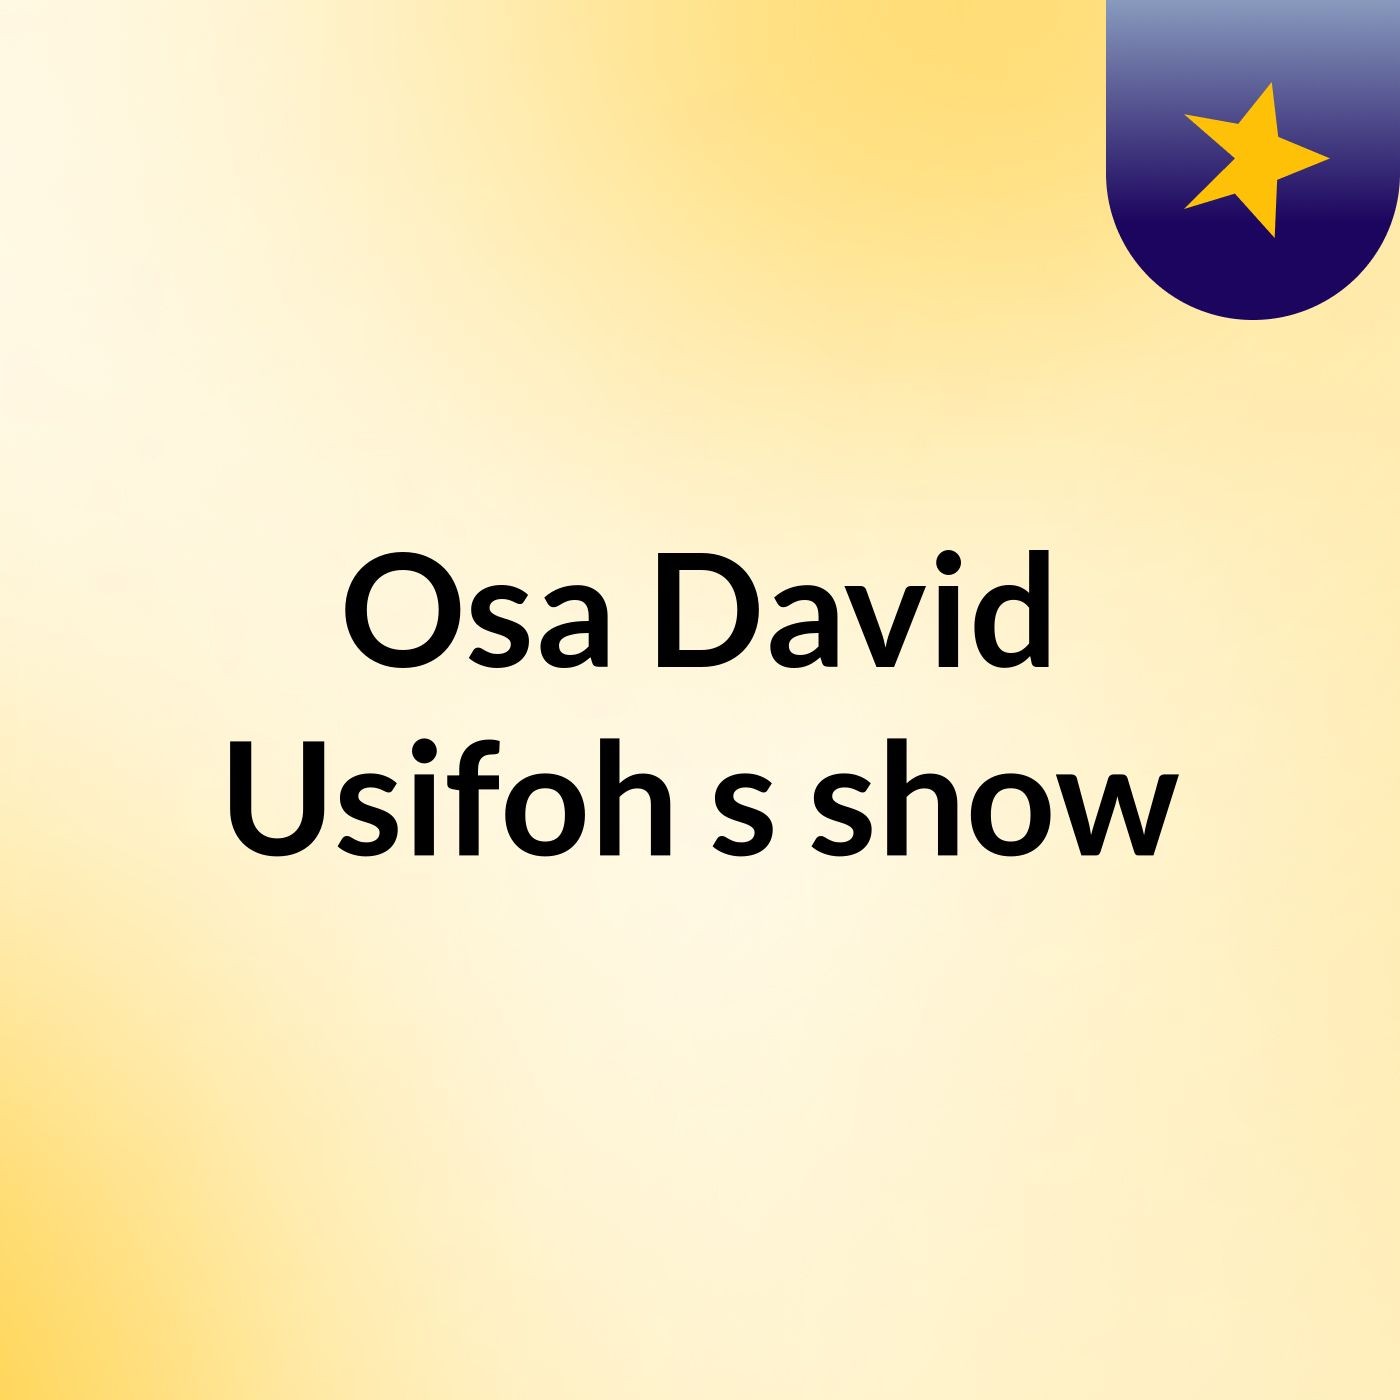 Episode 3 - Osa David Usifoh's show